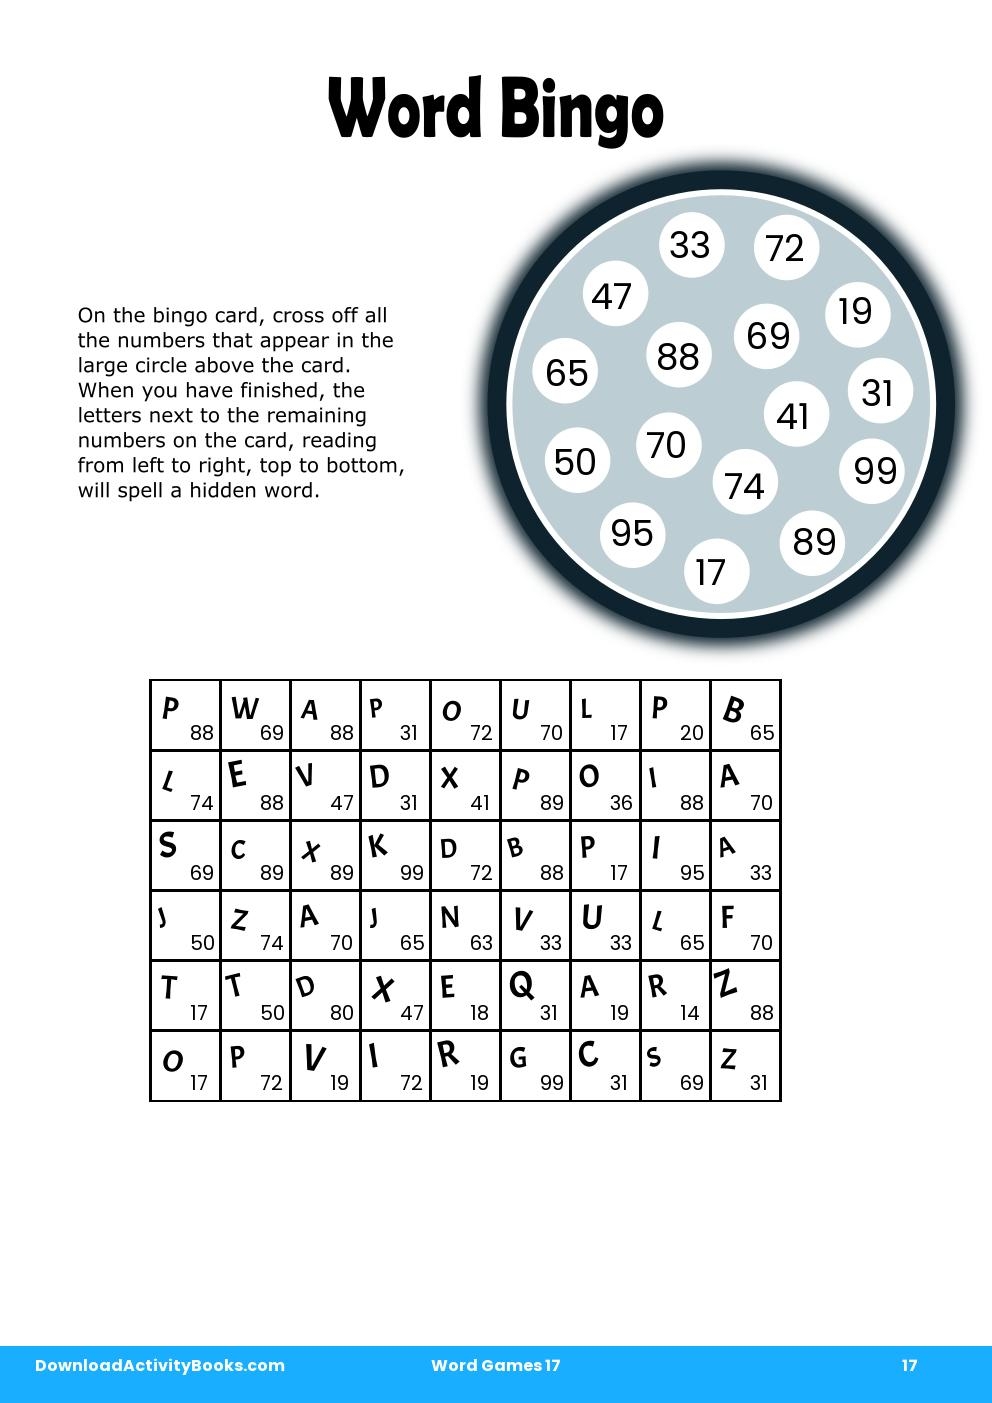 Word Bingo in Word Games 17